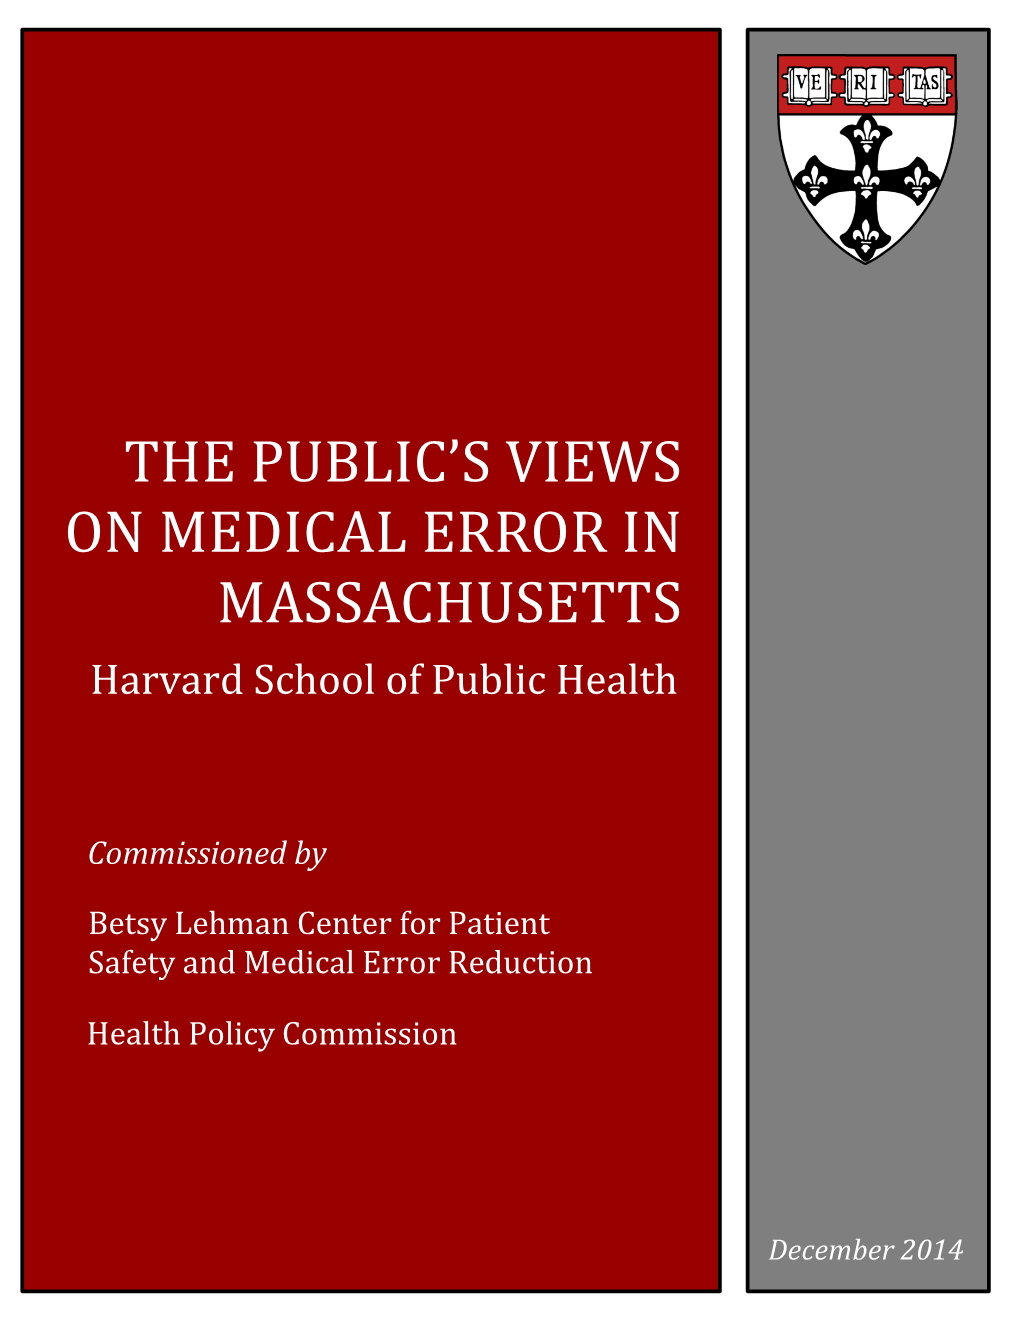 The Public's Views on Medical Error in Massachusetts